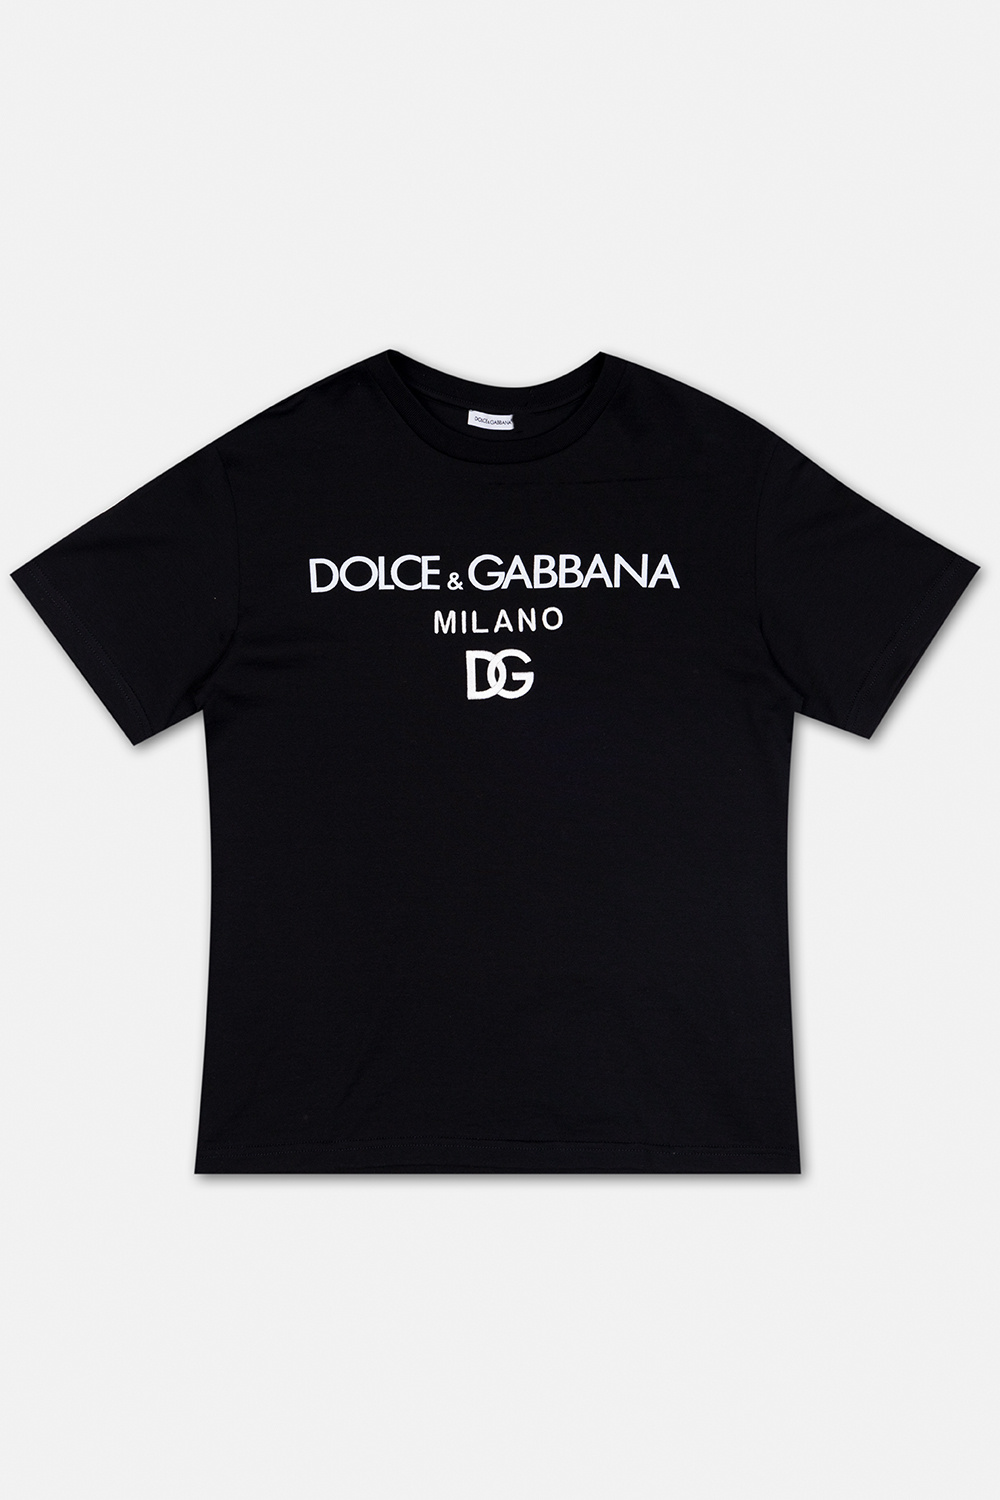 Dolce & Gabbana Kids leather cut-out logo sandals tortoiseshell dolce & Gabbana Woman's Black Cady Dress With Bow